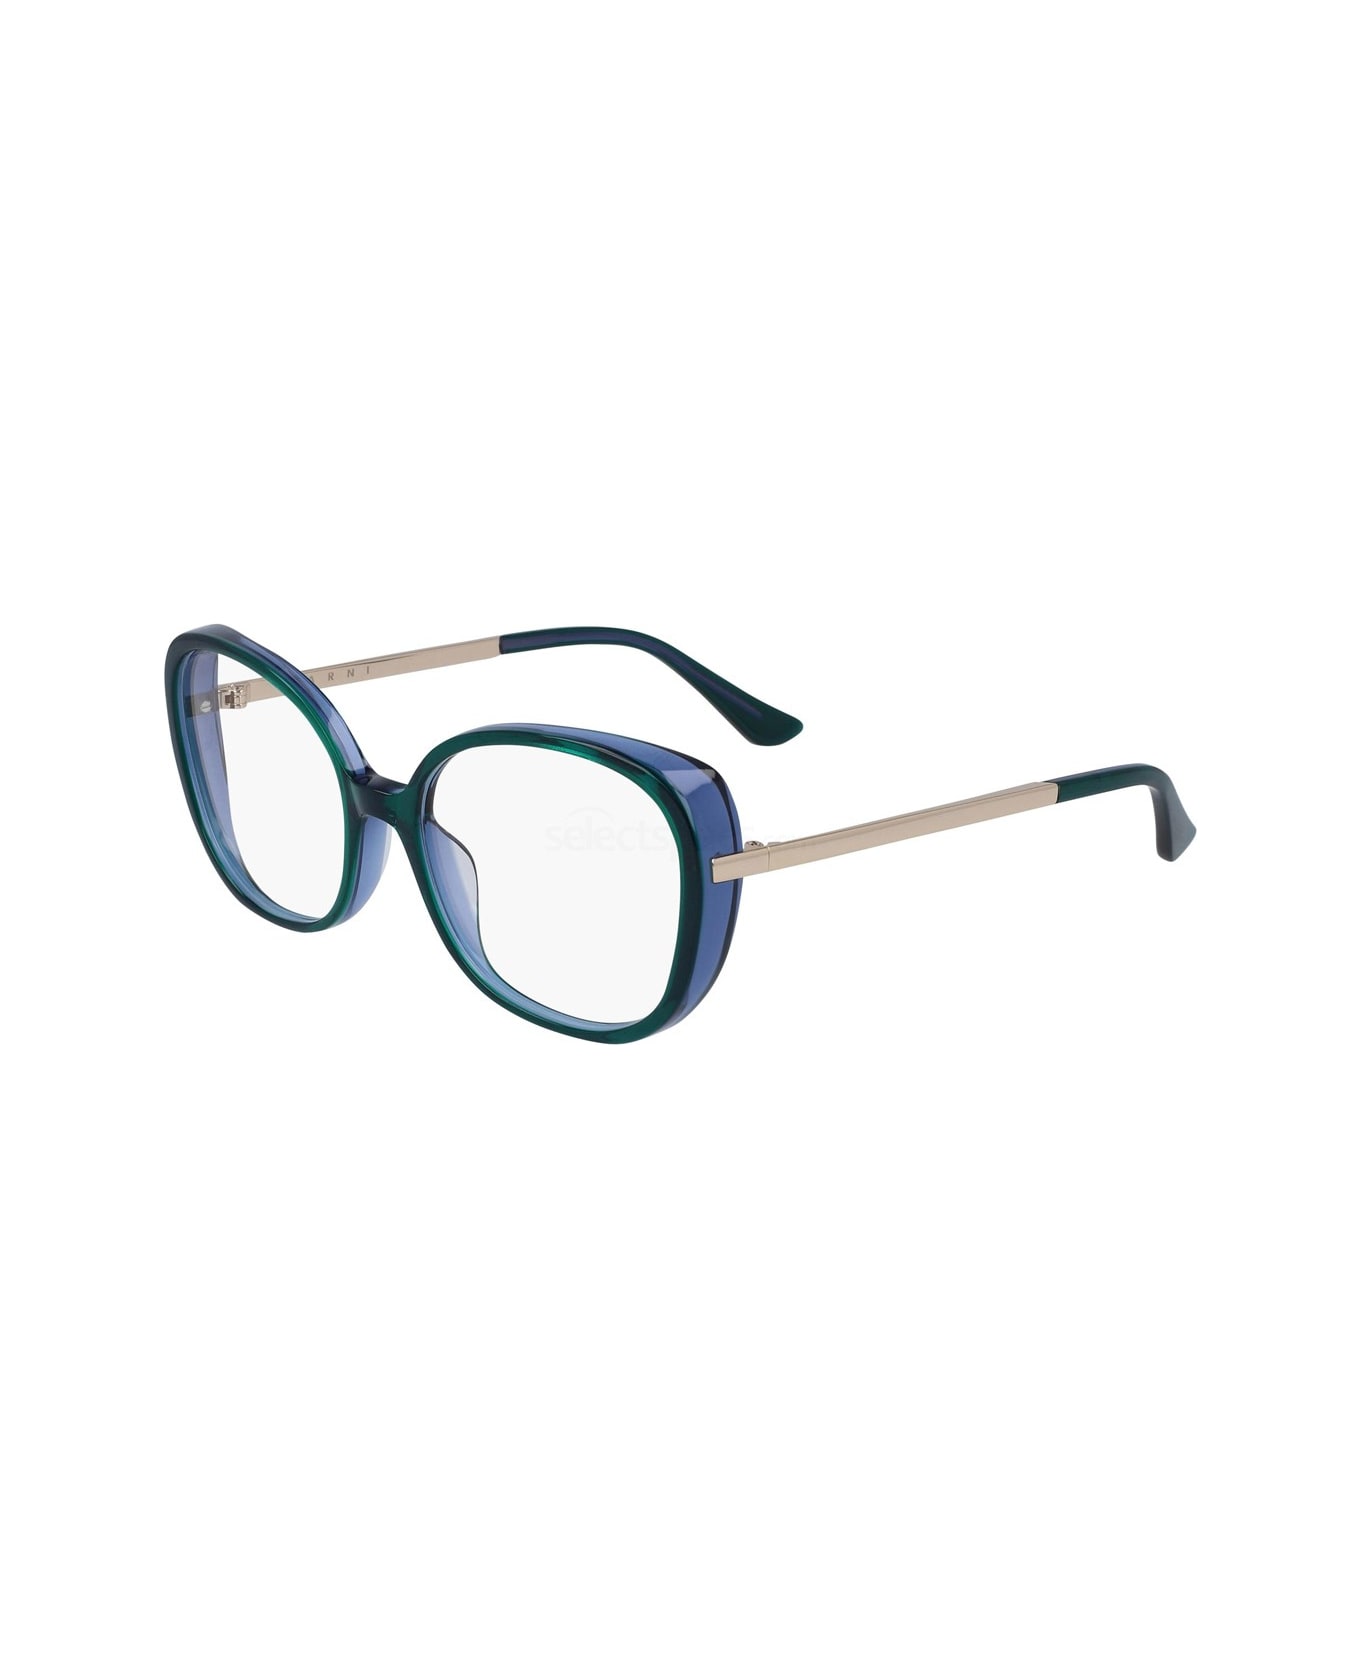 Marni Eyewear Me2633 Glasses - Verde アイウェア